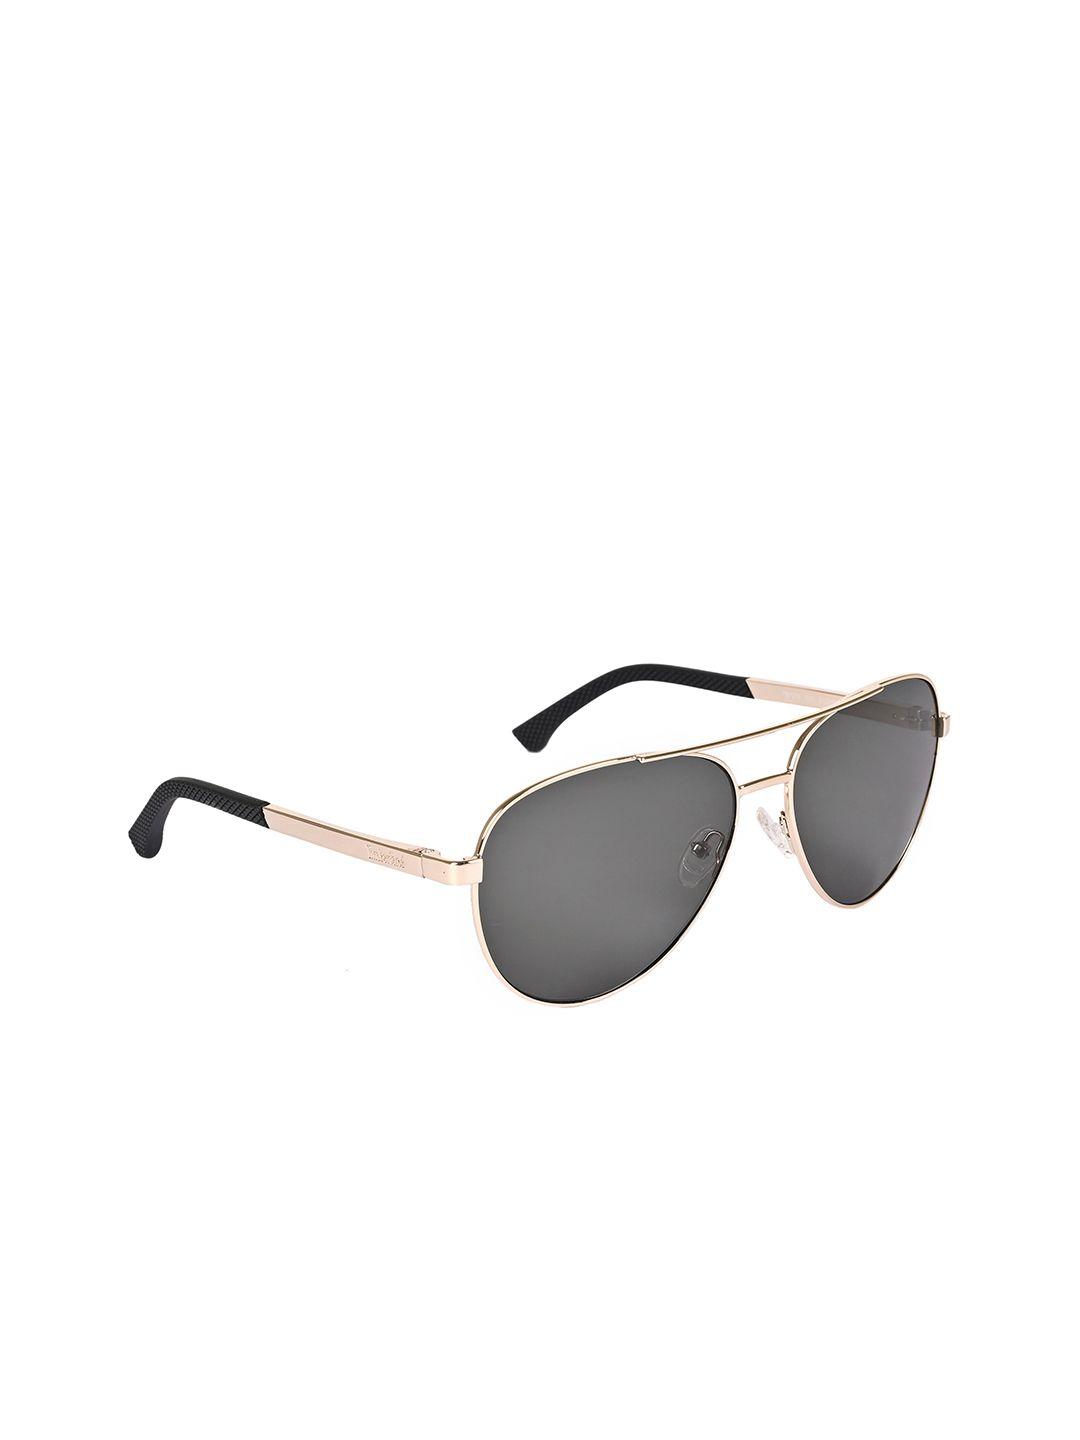 timberland-men-uv-protective-aviator-sunglasses-tb7210-61-32n